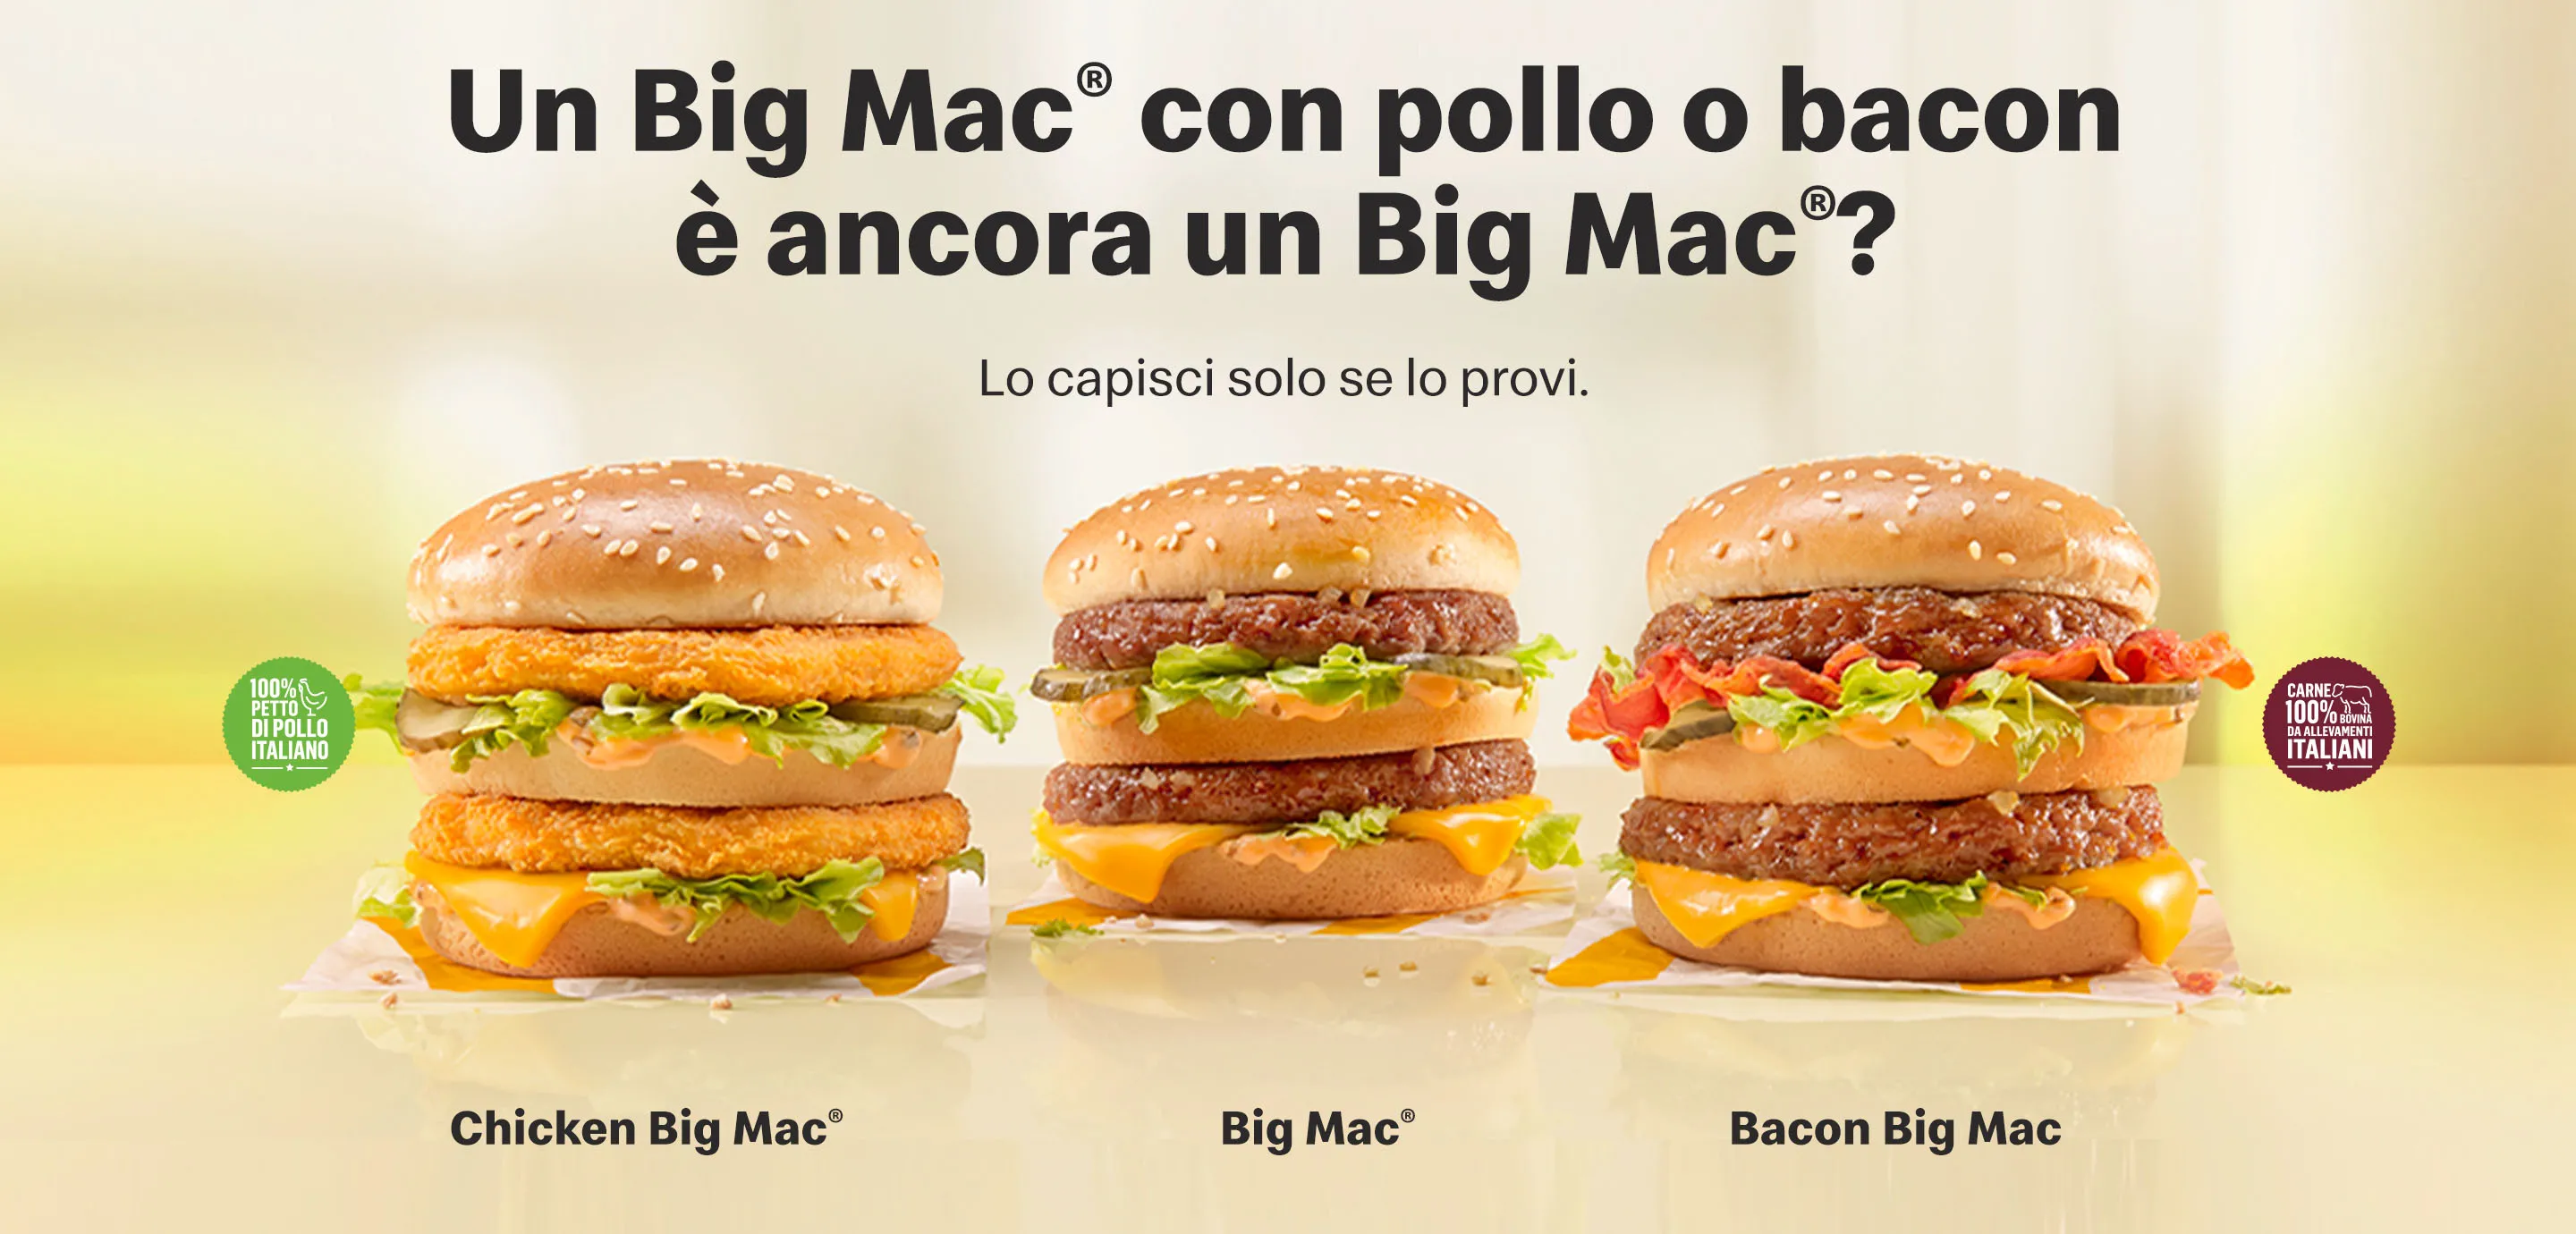 Un Big Mac® con pollo o bacon è ancora un Big Mac®?